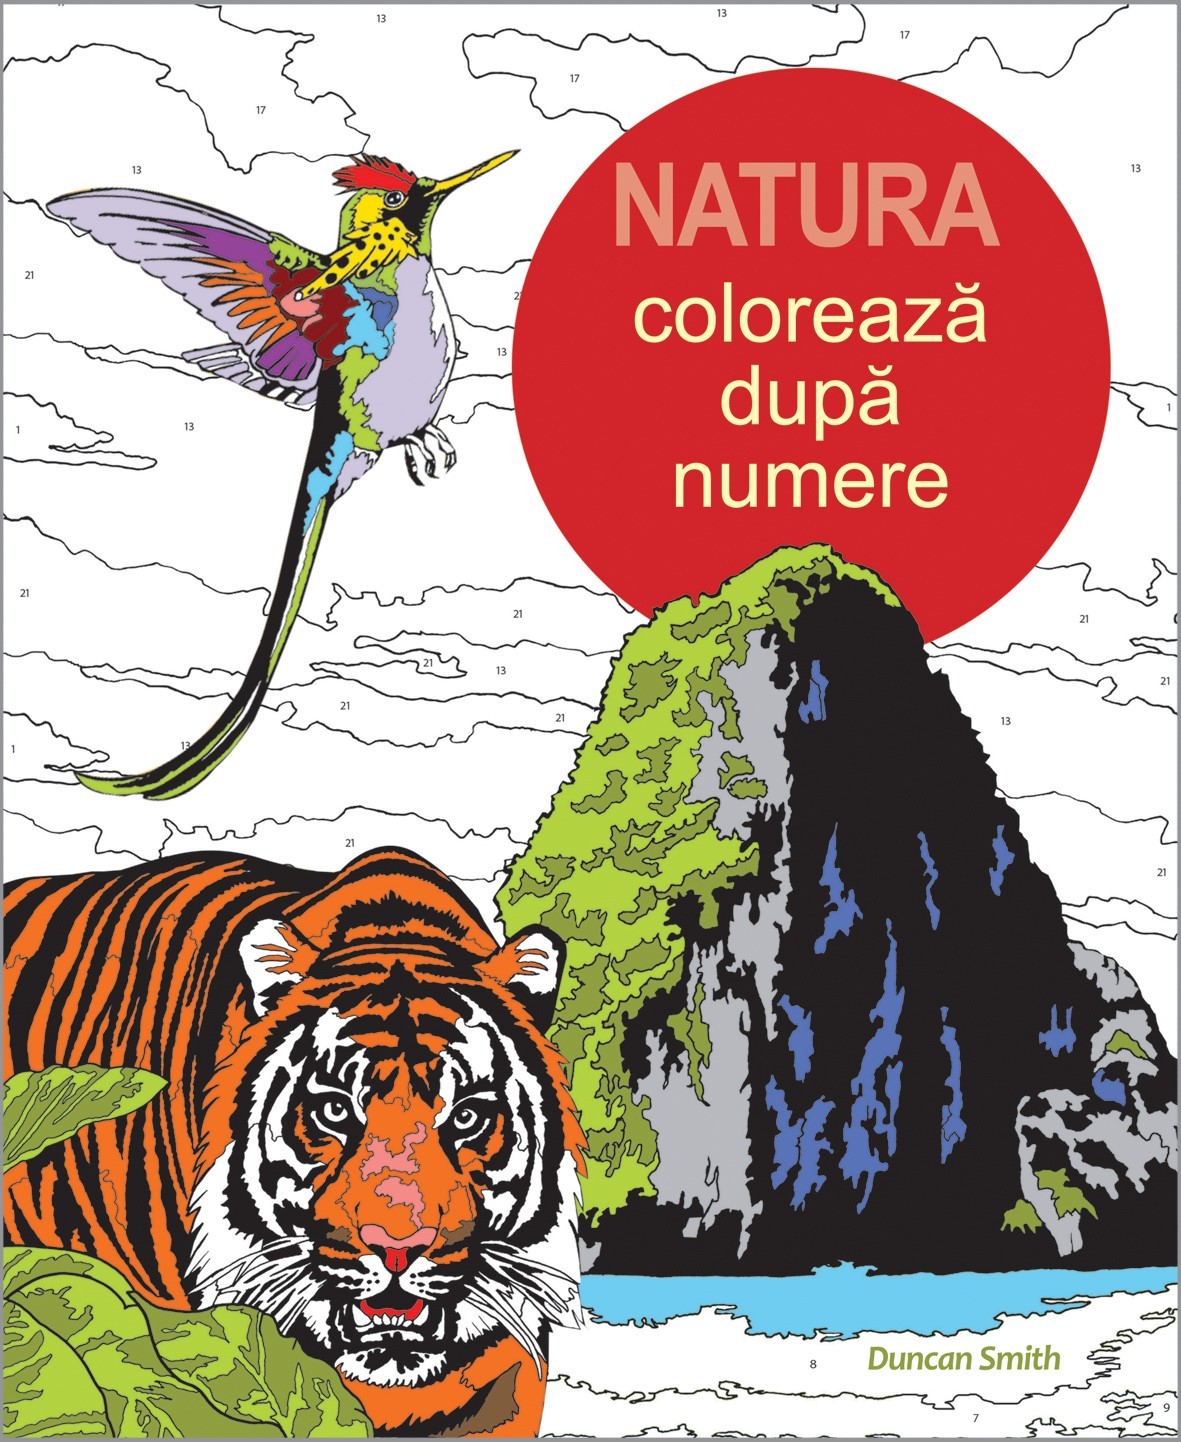 Coloreaza dupa numere - Natura | Duncan Smith